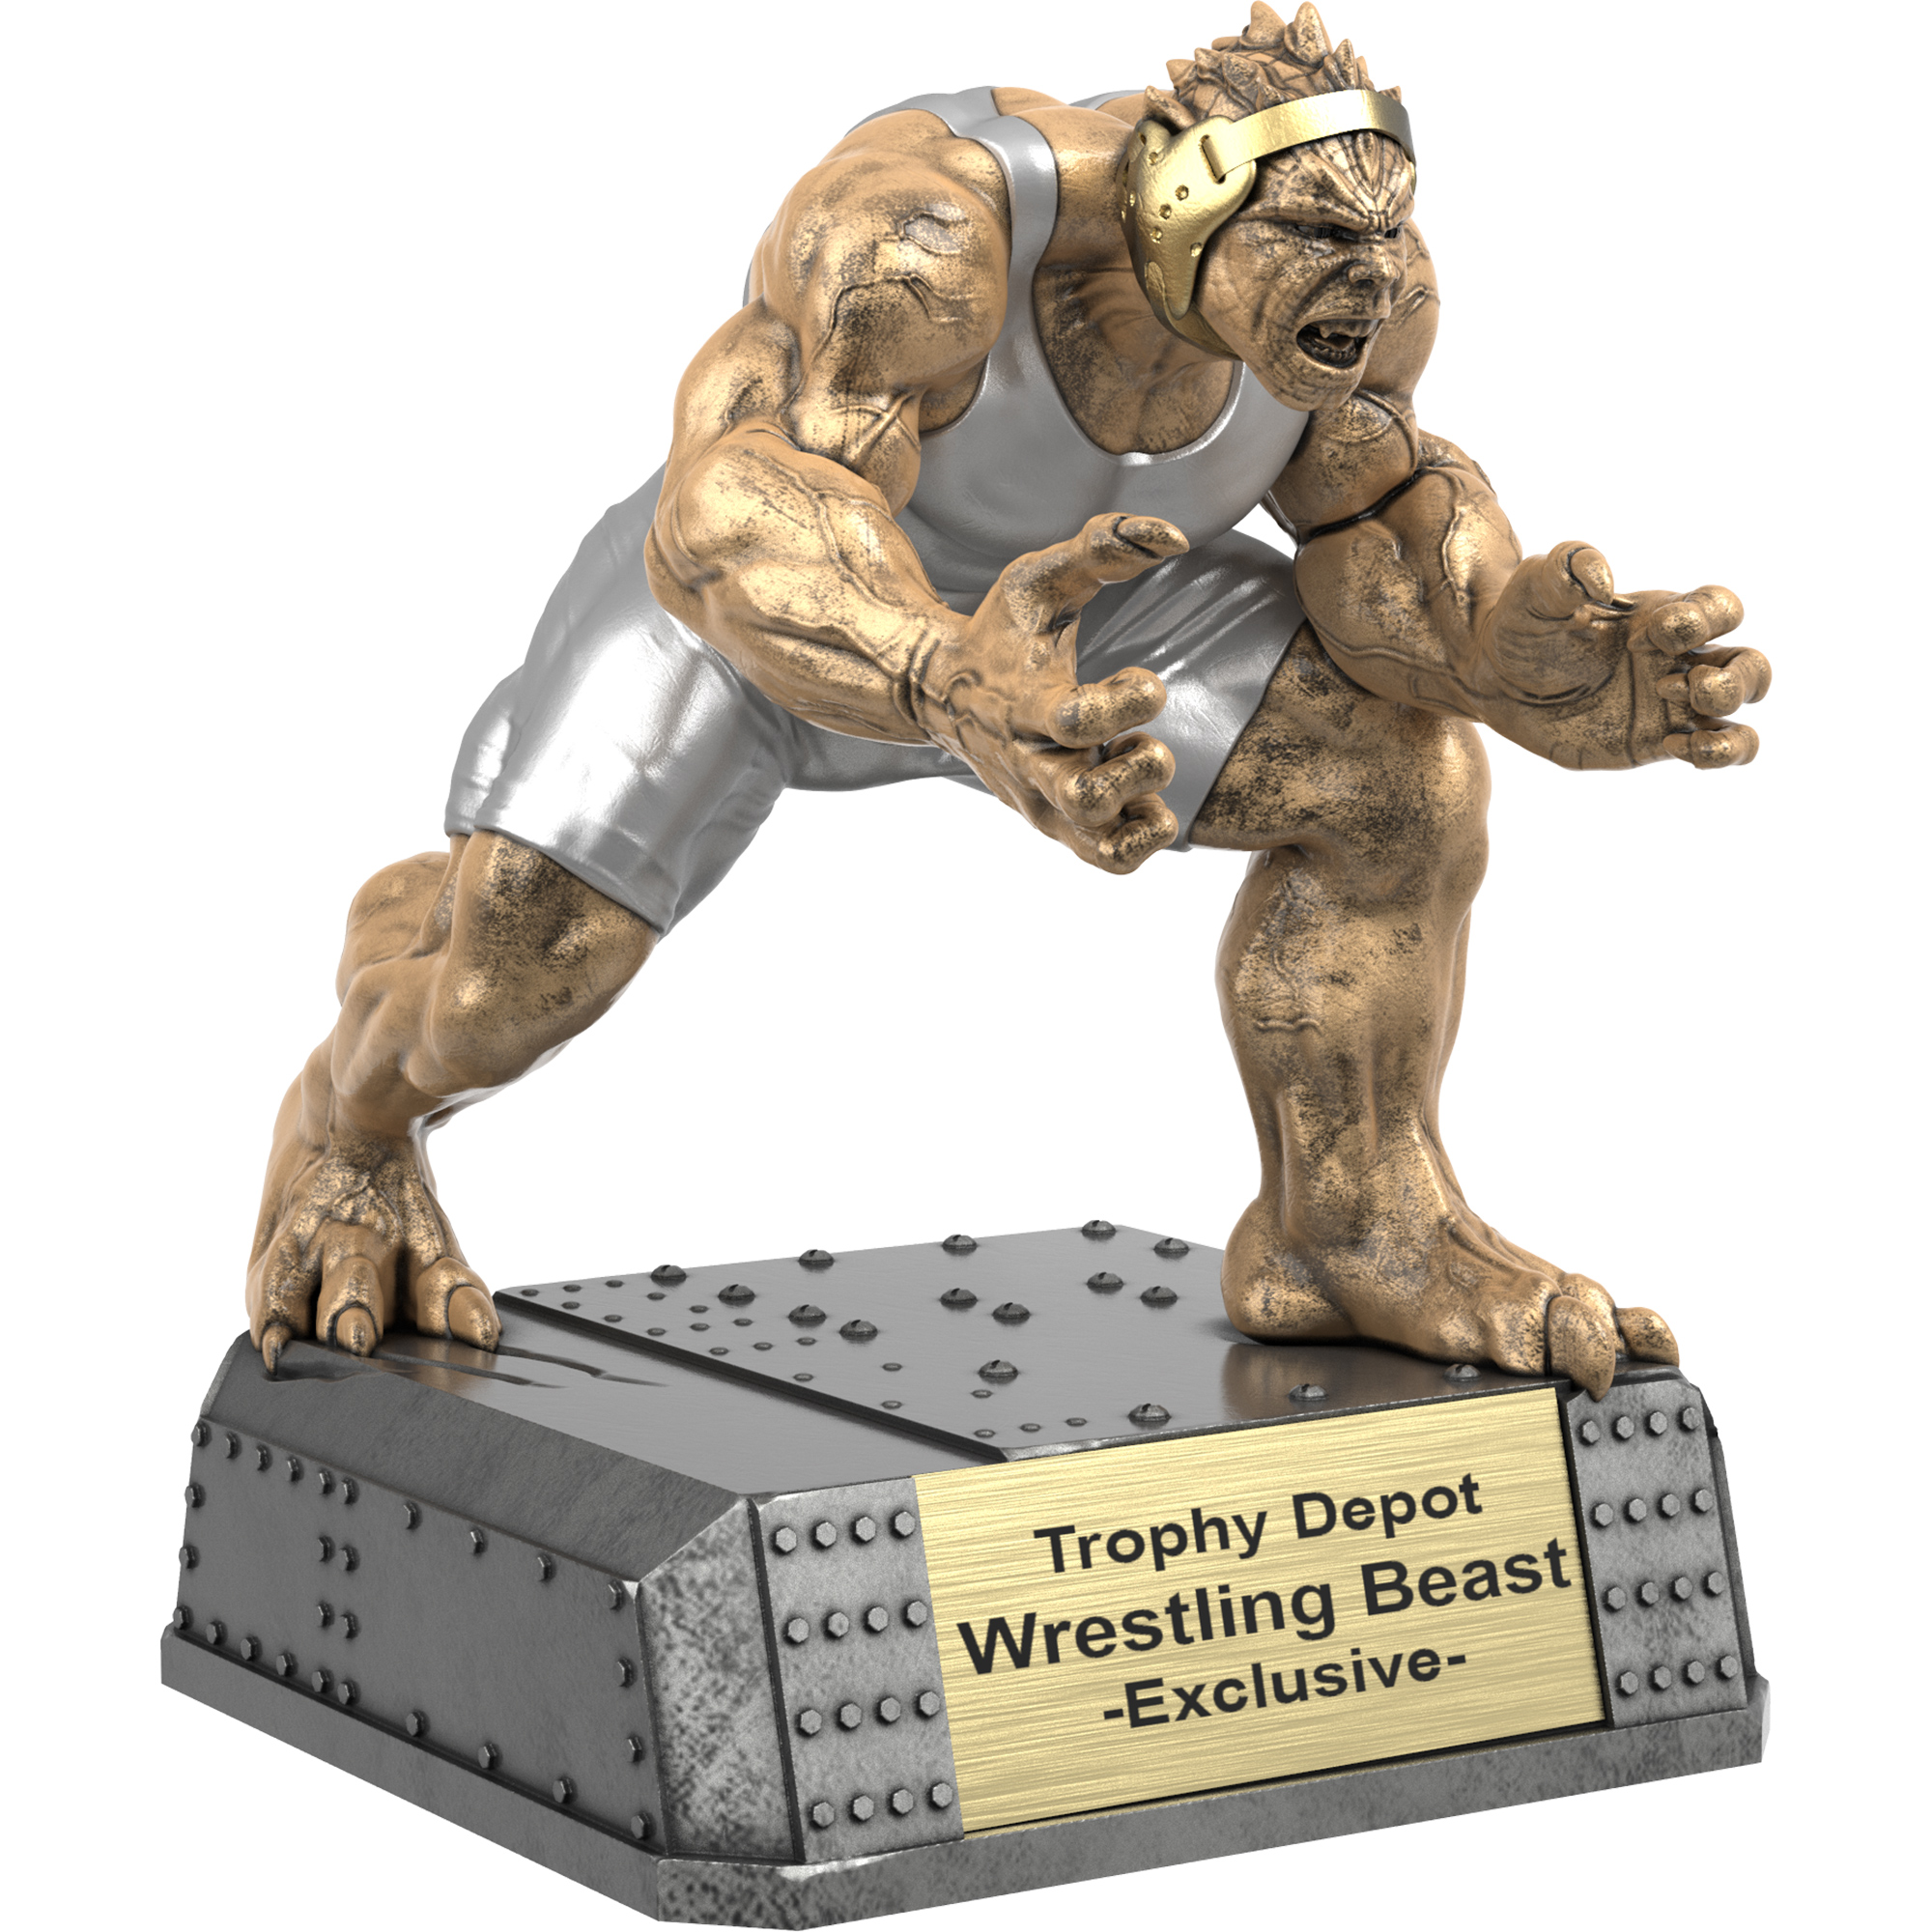 Wrestling Beast Sculpture Trophy - 8 inch